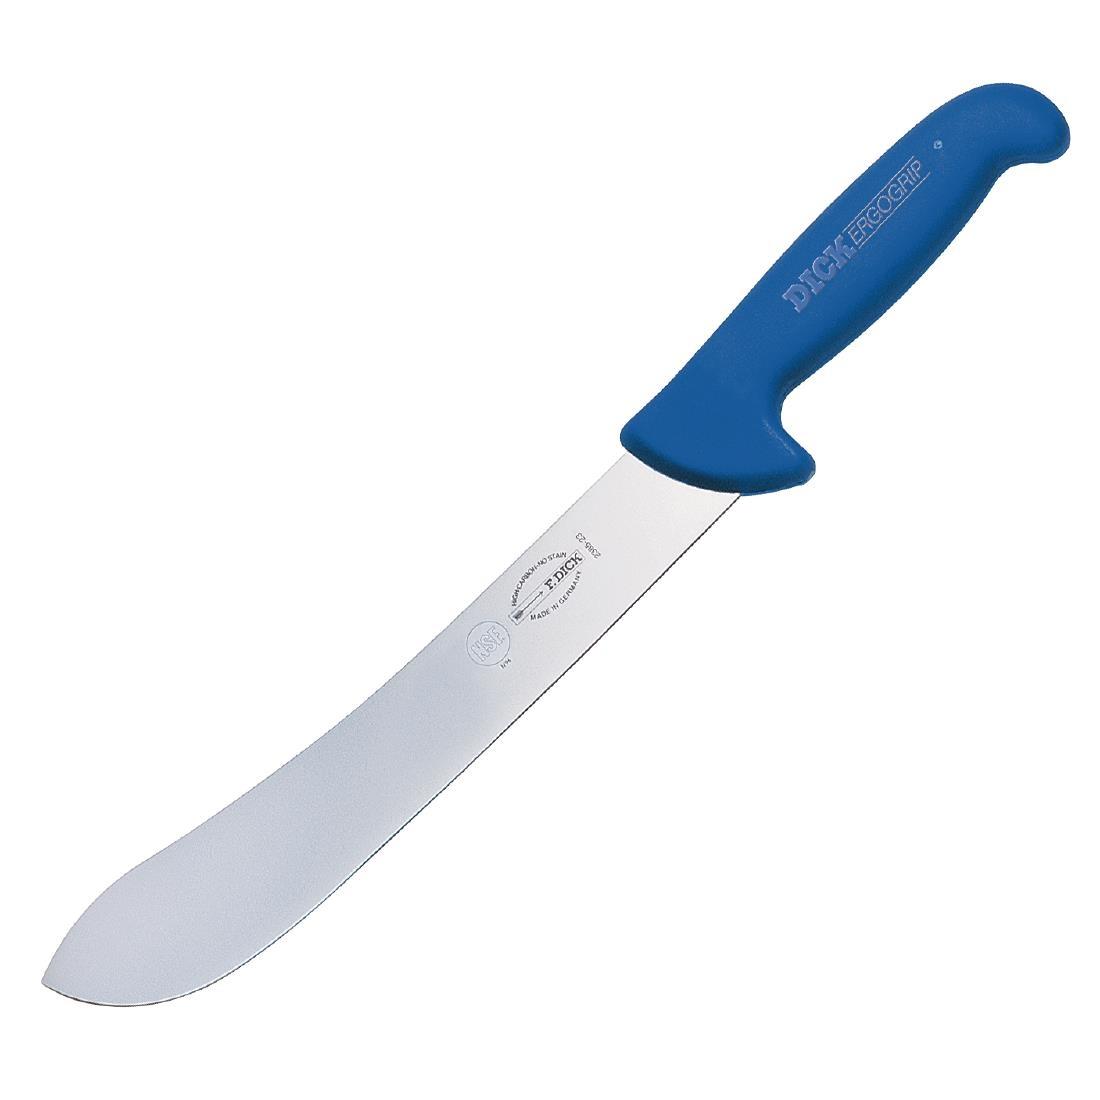 Dick Ergogrip Butchers Block Knife 8.5" - FB041  - 1